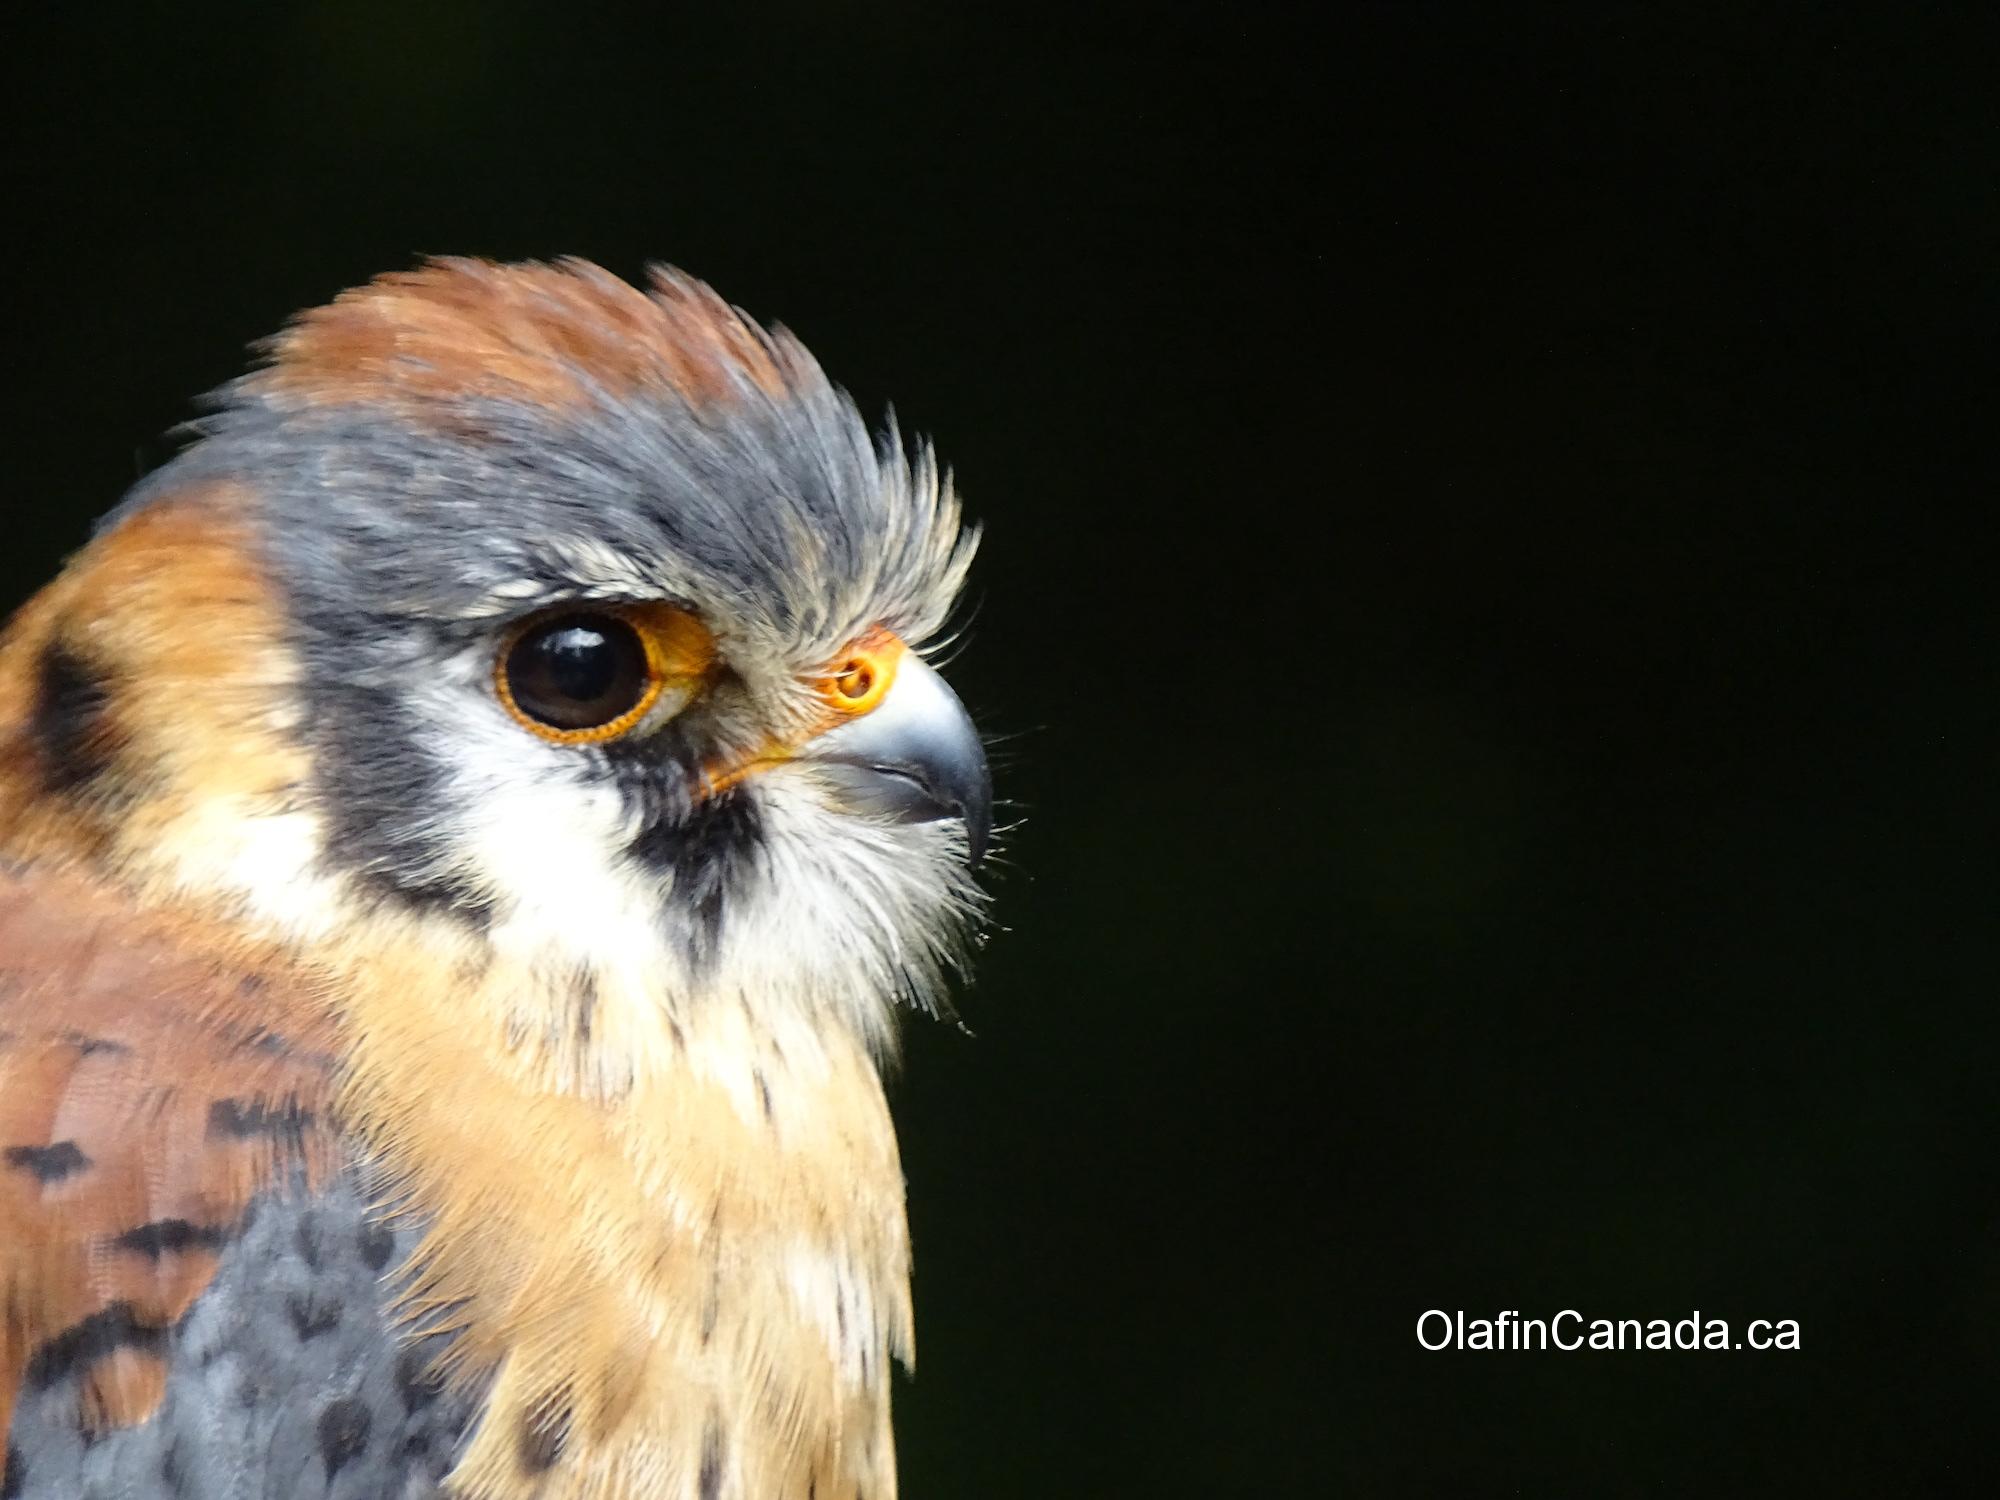 American Kestrel falcon on Vancouver Island #olafincanada #britishcolumbia #discoverbc #wildlife #americankestrelfalcon